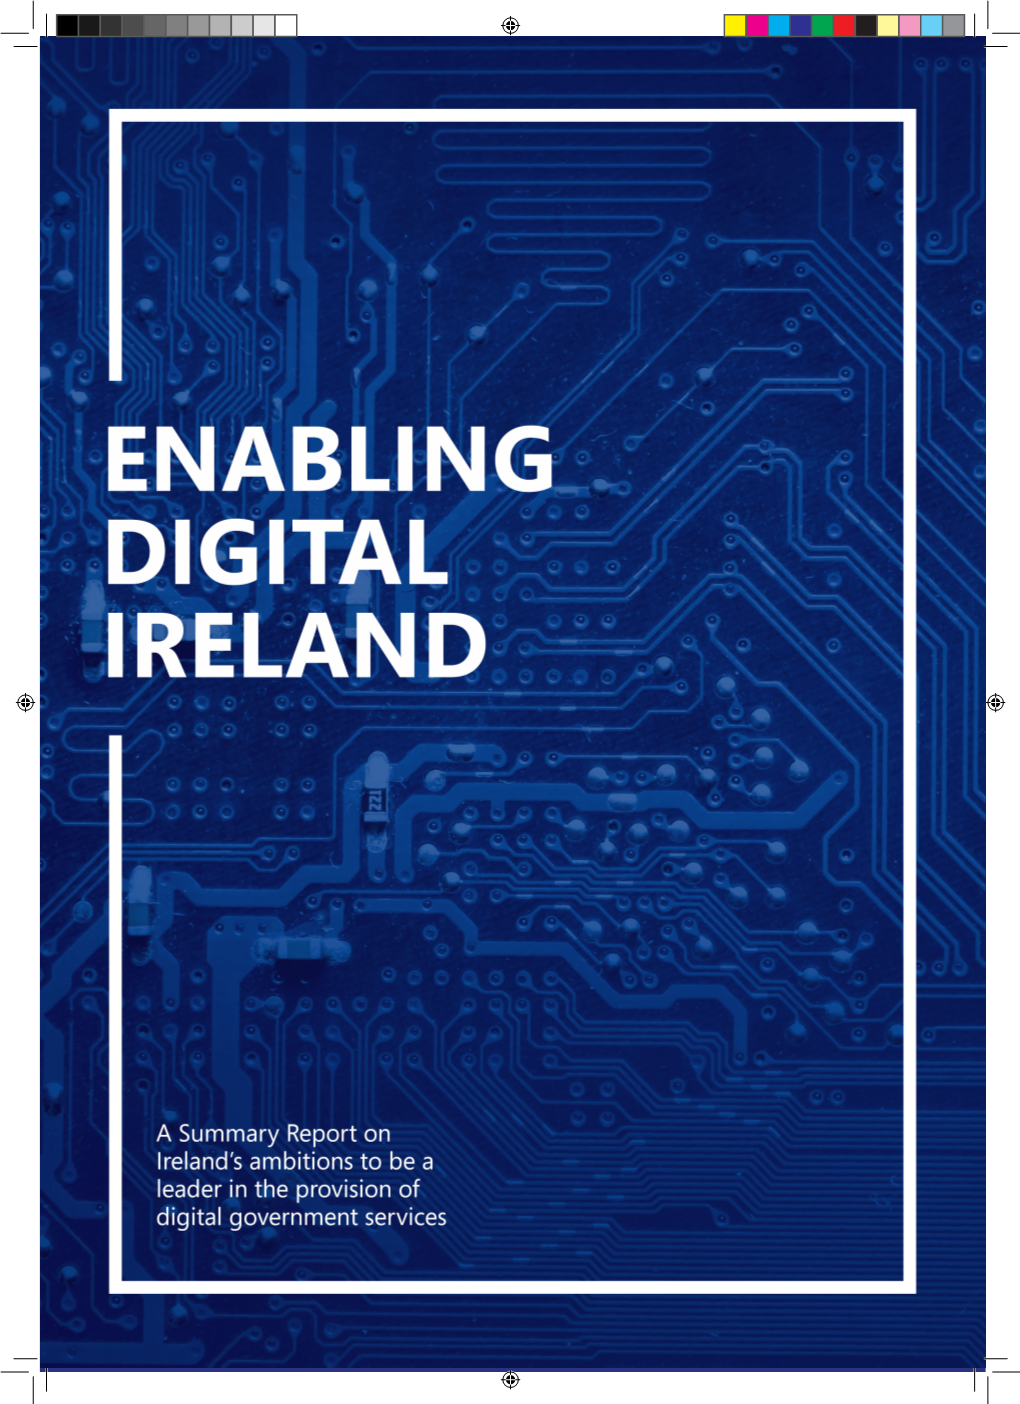 Enabling Digital Ireland Get the Report